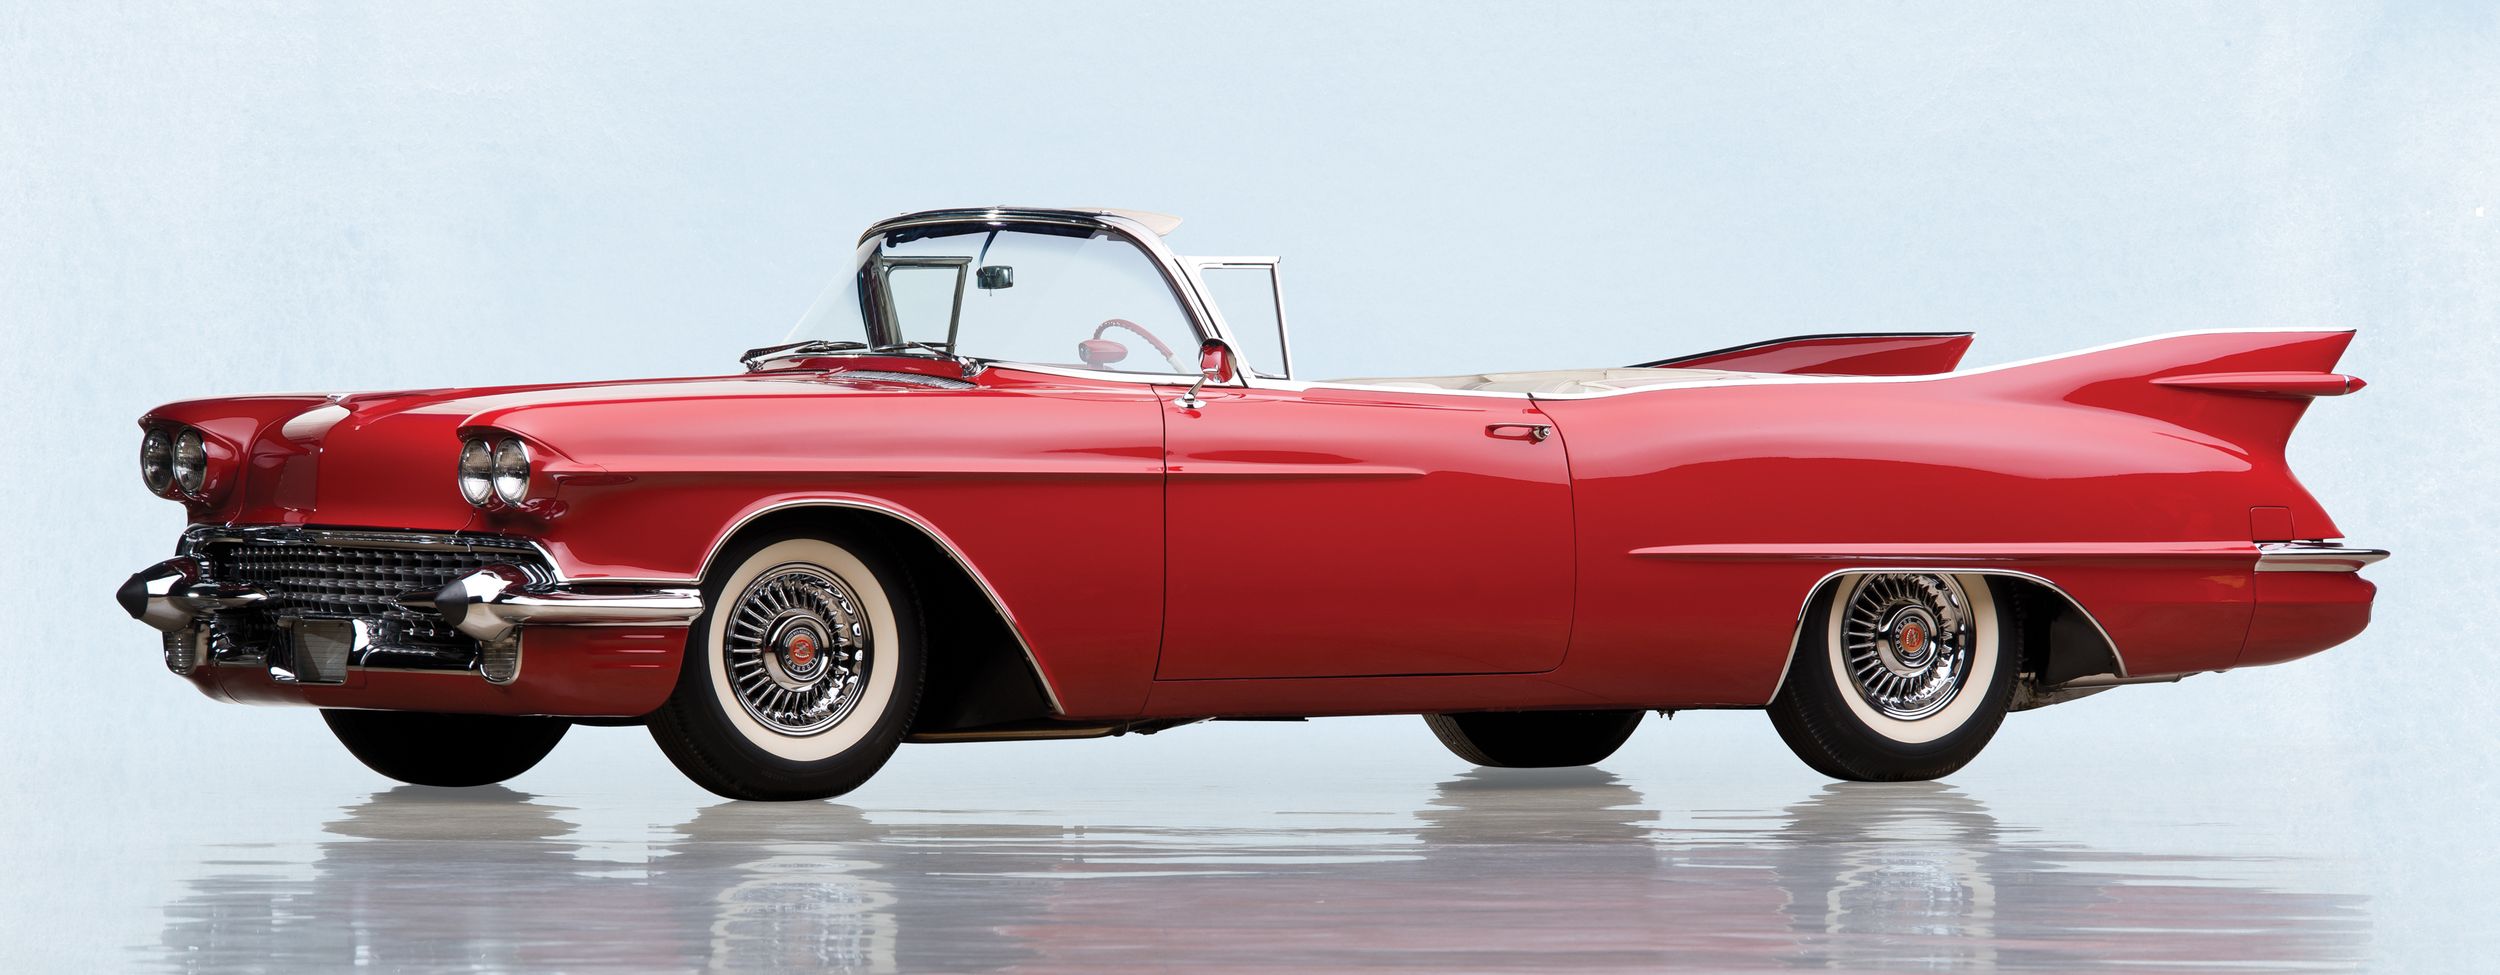 HD Quality Wallpaper | Collection: Vehicles, 2500x975 1958 Cadillac Eldorado Biarritz